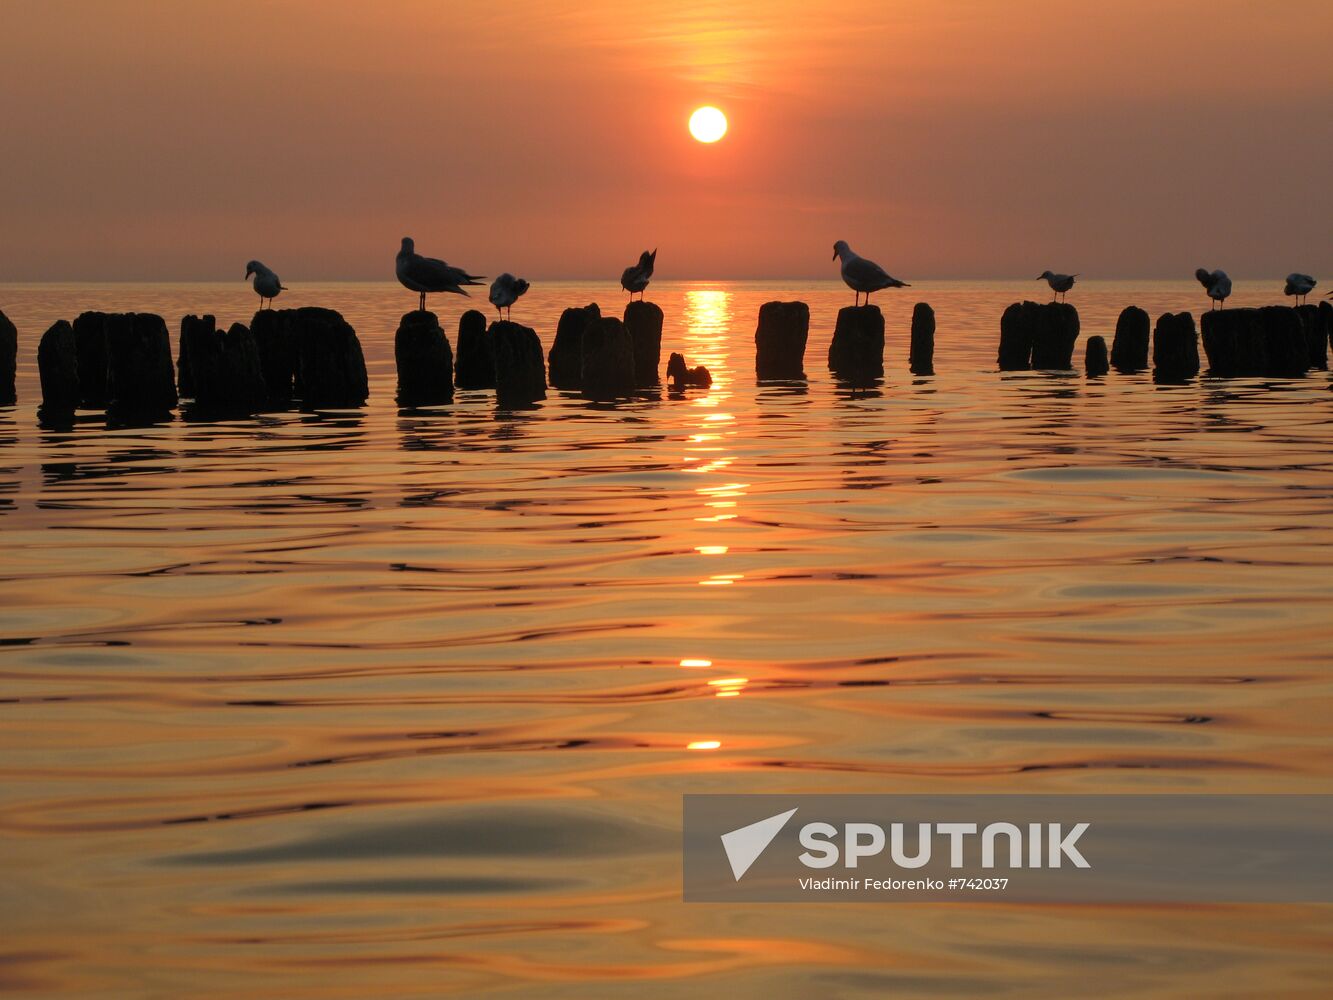 Sunset at Baltic Sea